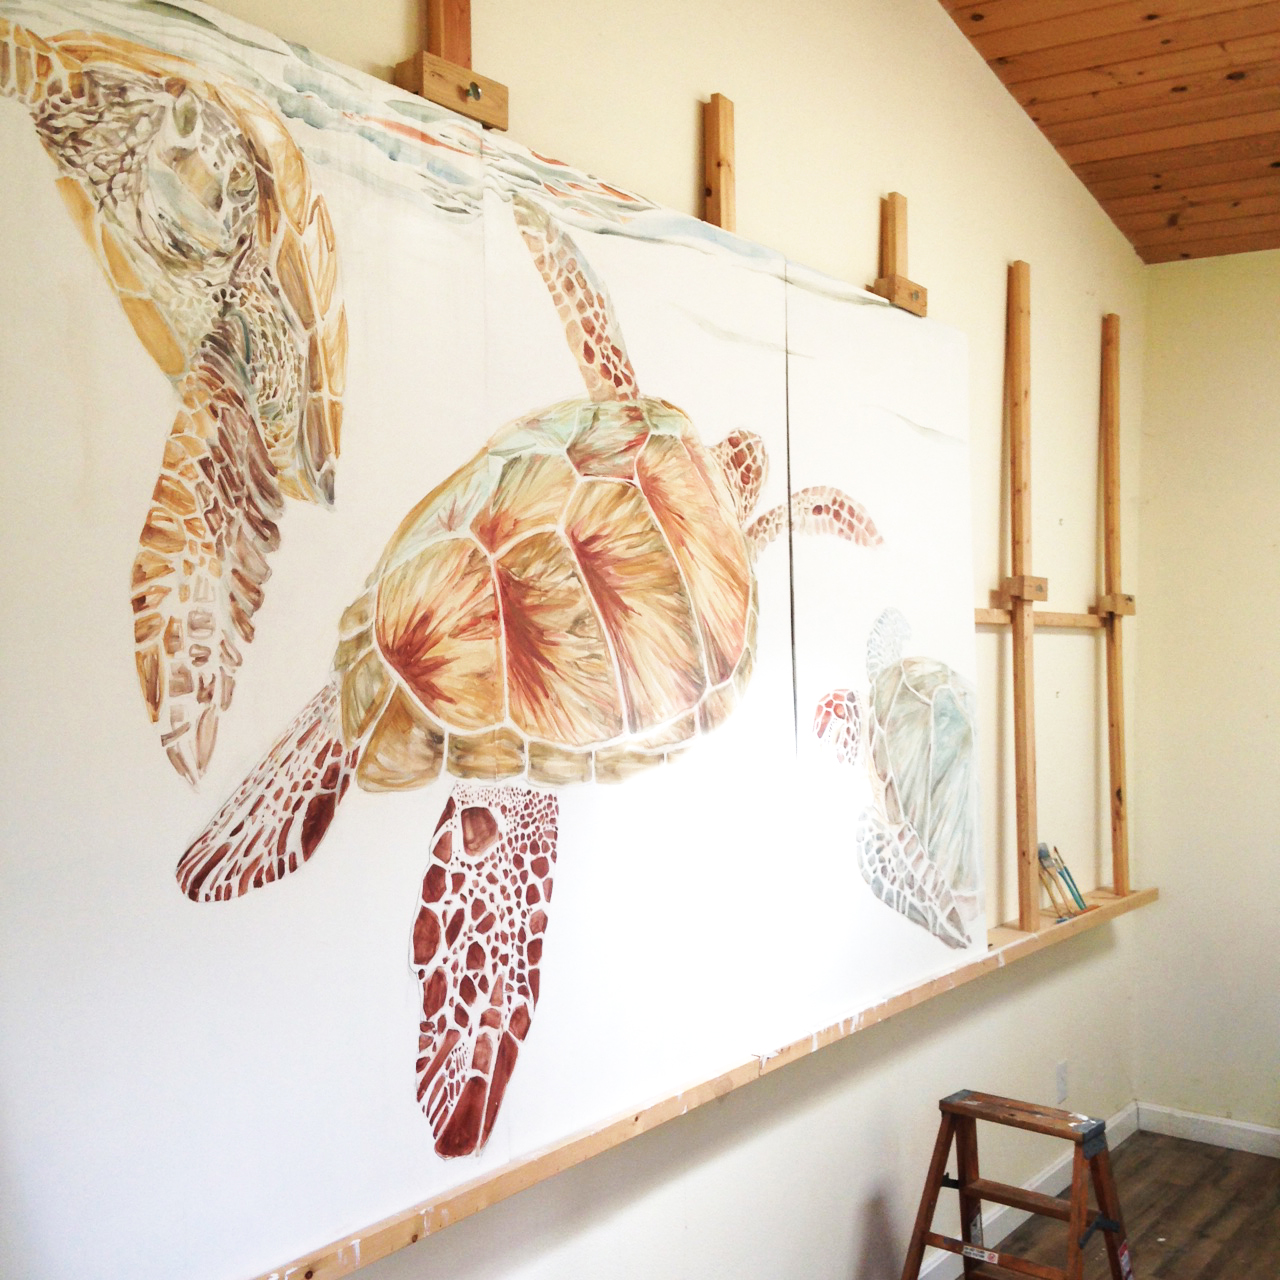 Sea Turtles fresco panels